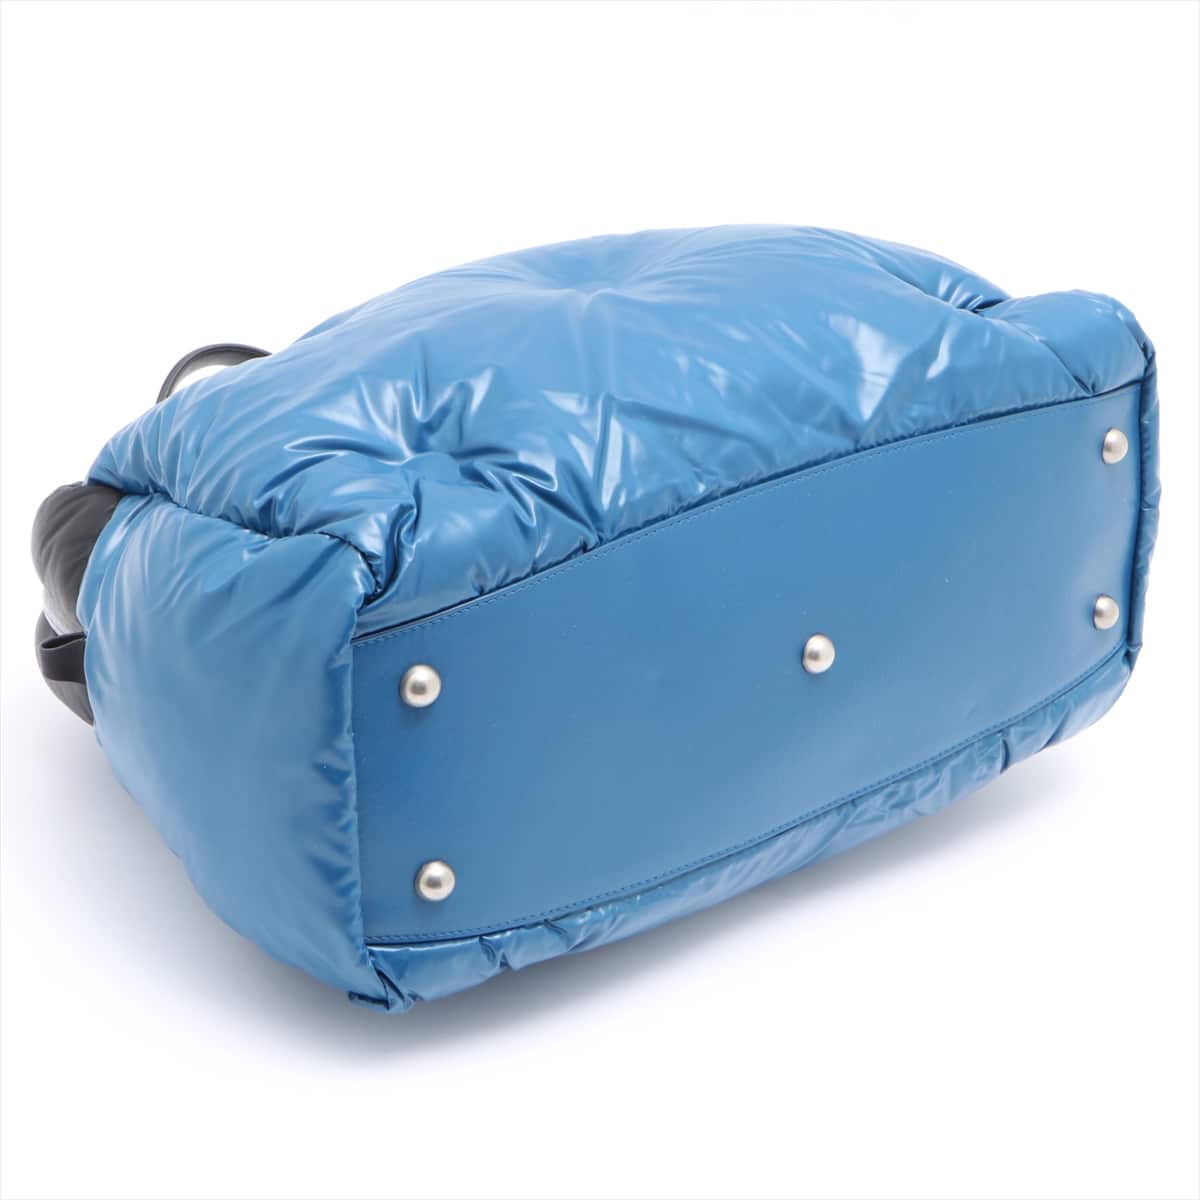 Maison Margiela Gram slam Nylon 2way handbag Blue